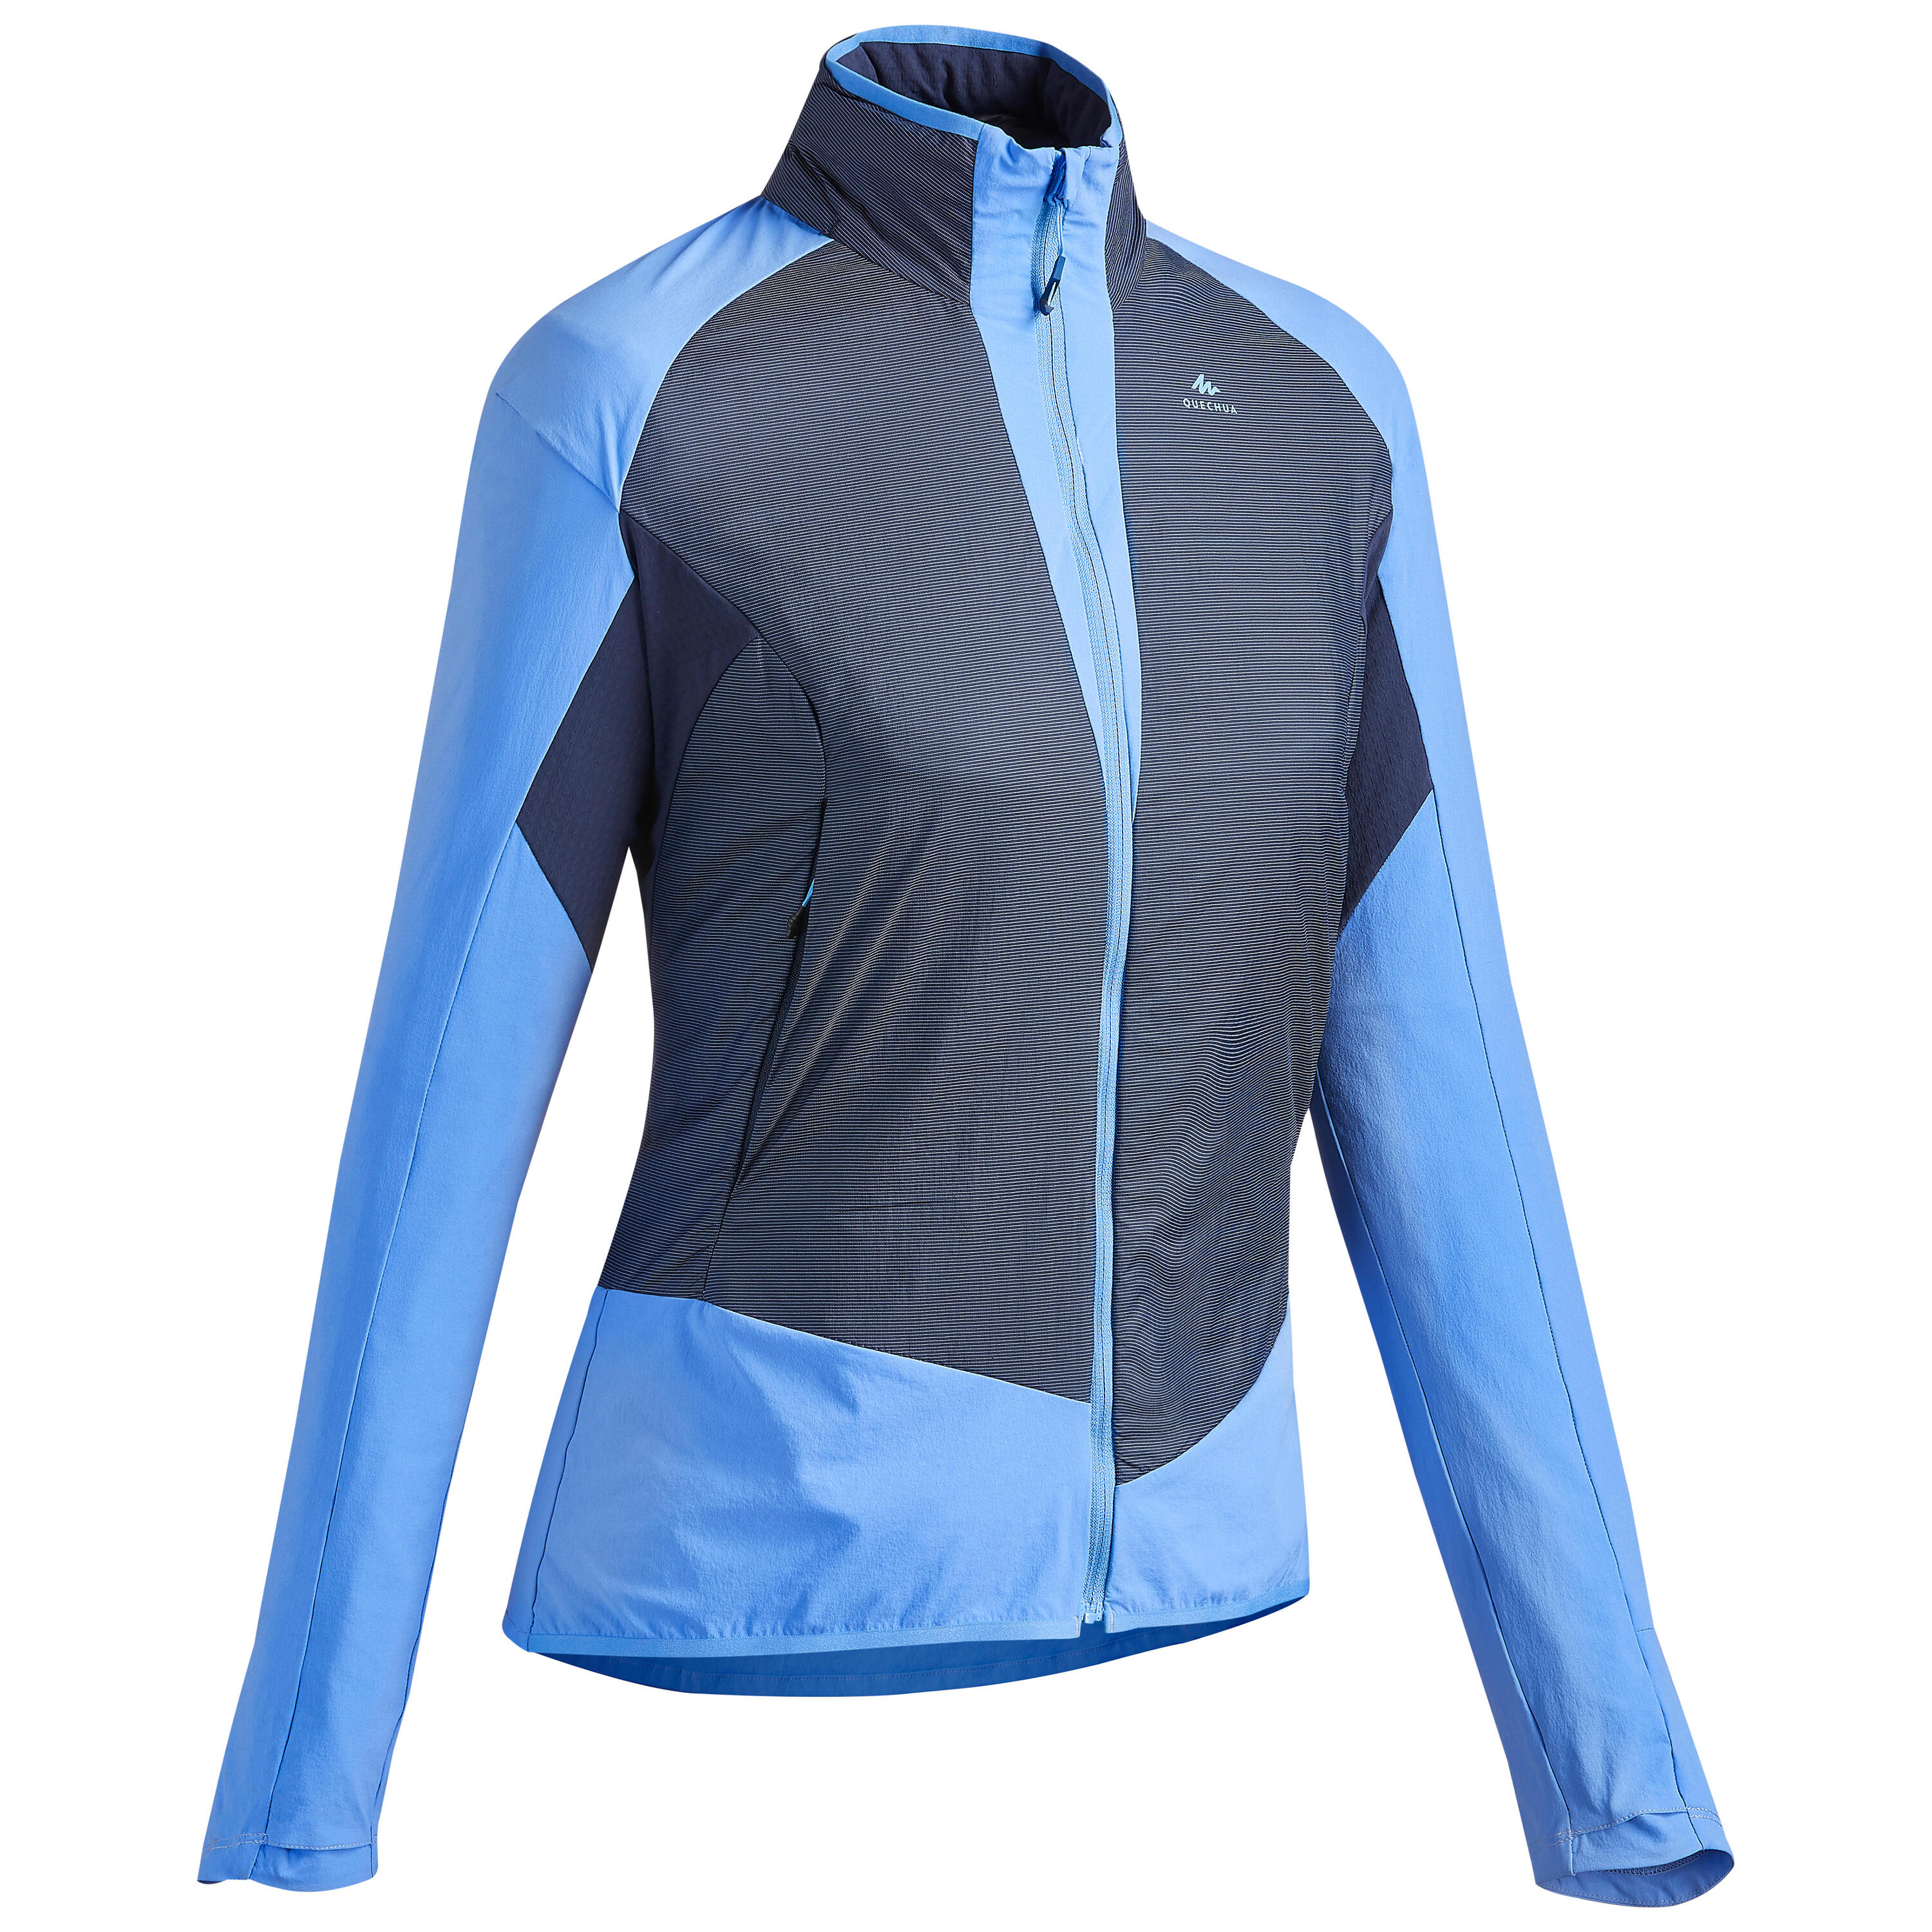 Women’s Warm Jacket For Fast Hiking FH 900 Hybrid - Blue 4/7